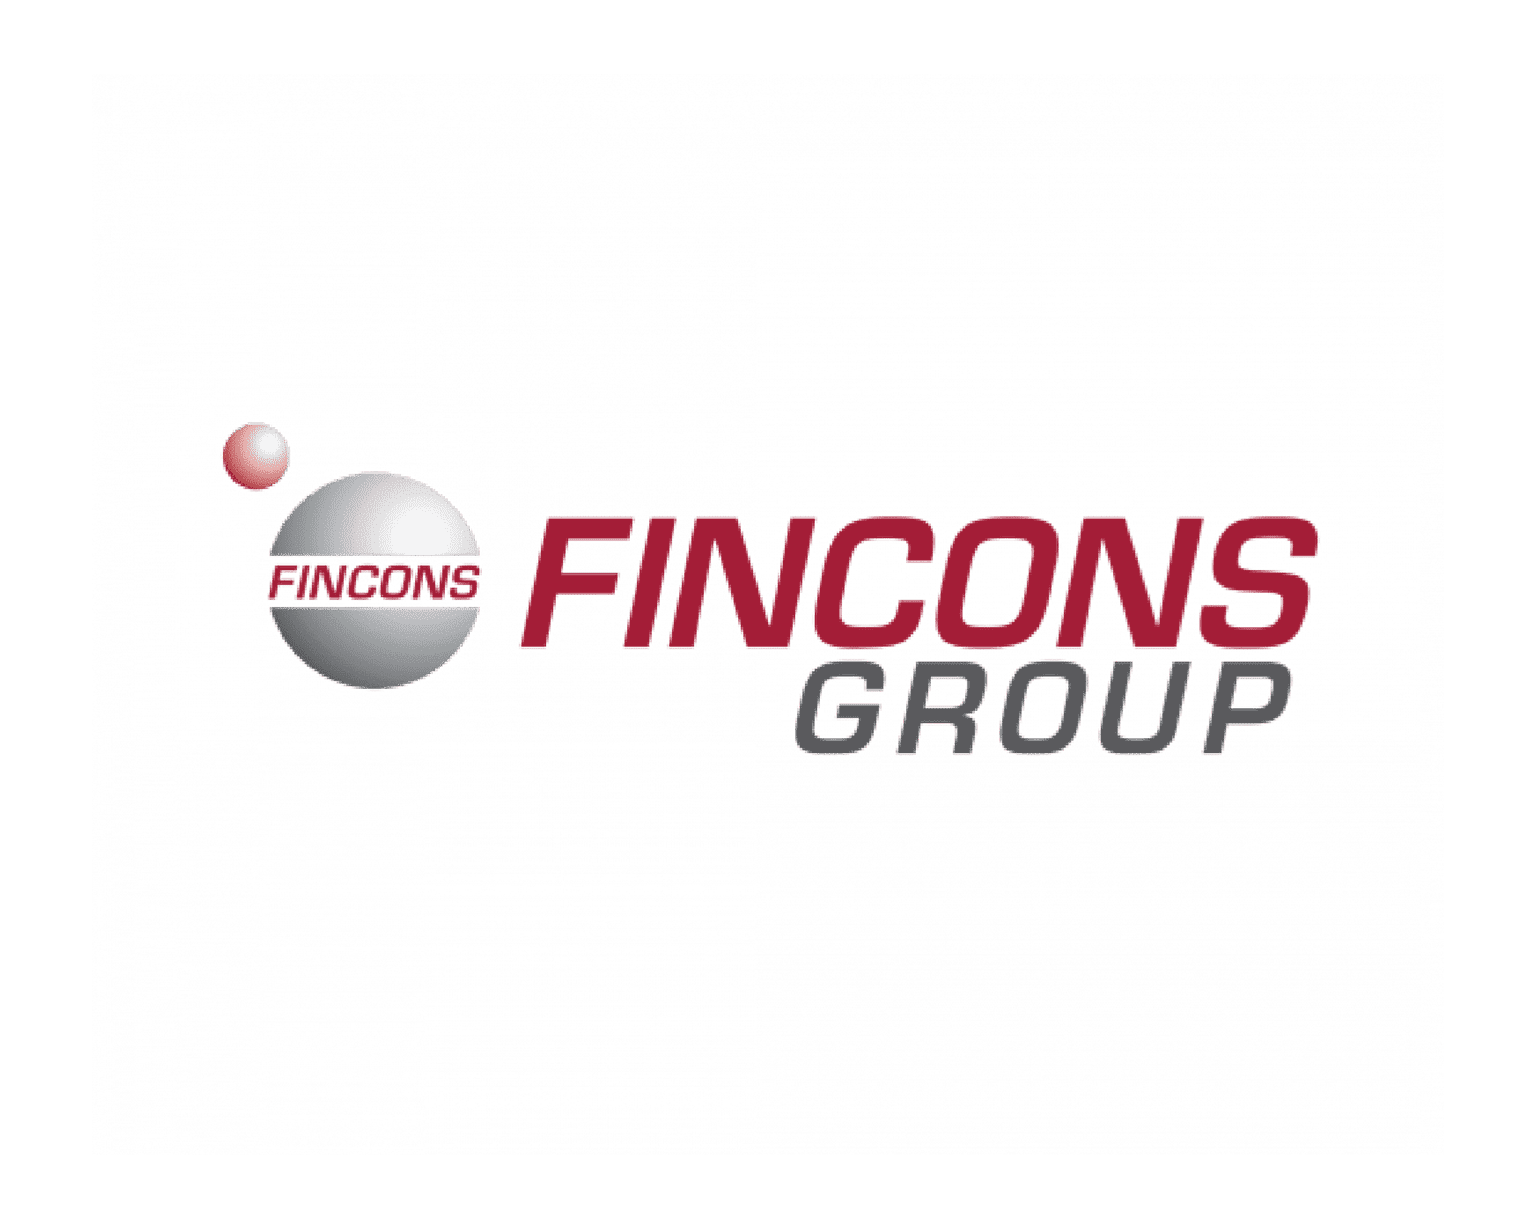 Fincons_-1536x1229